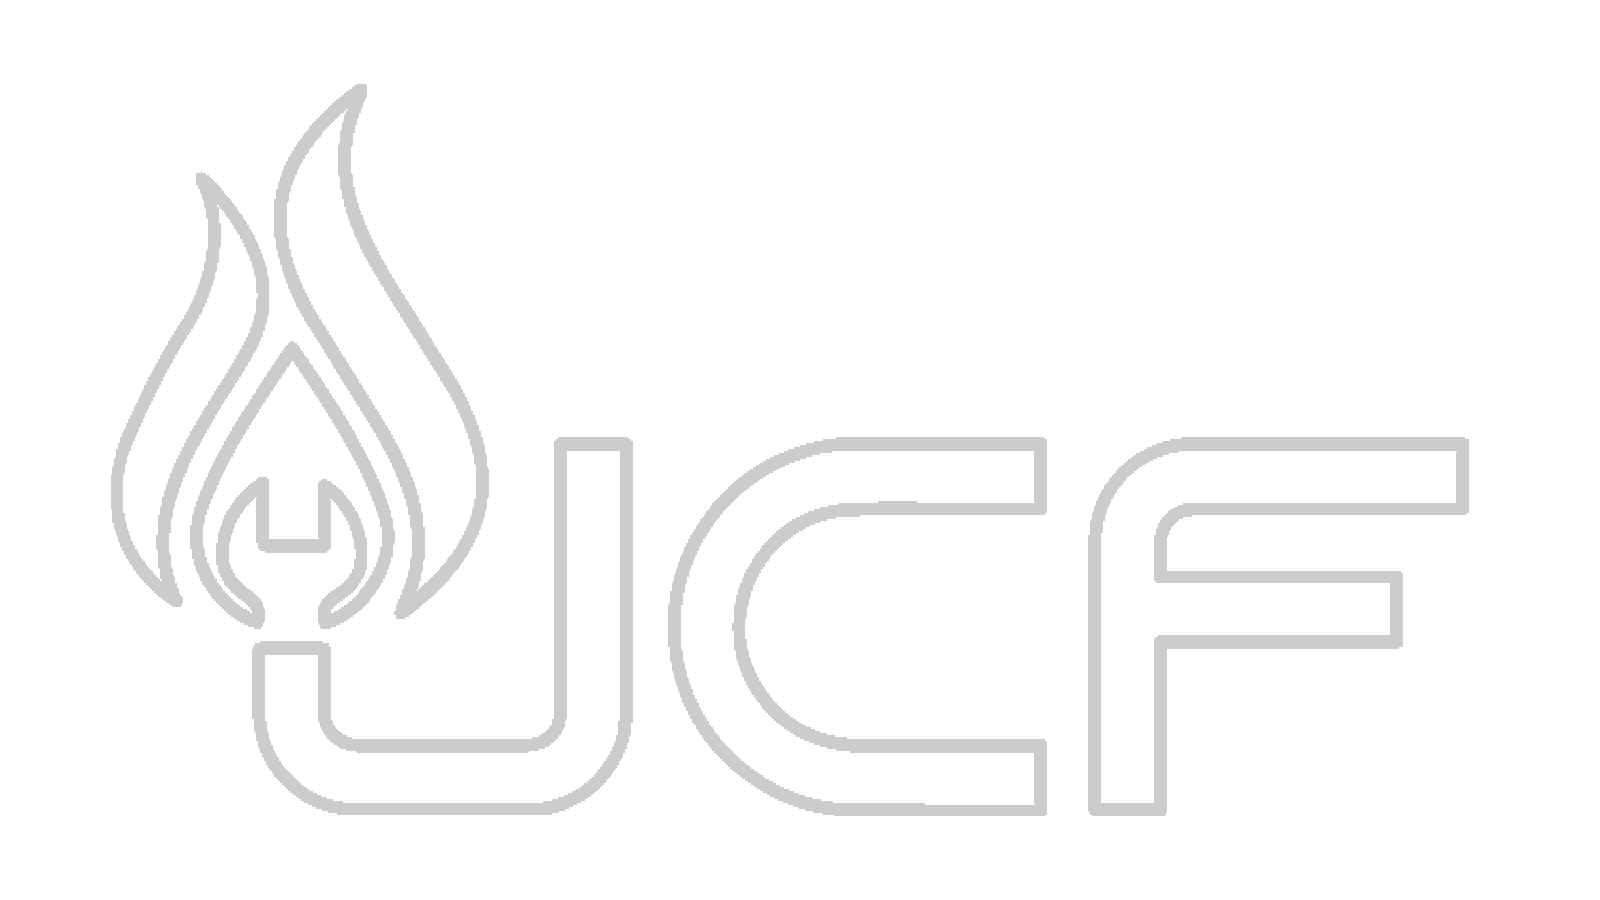 JCF Installatietechniek